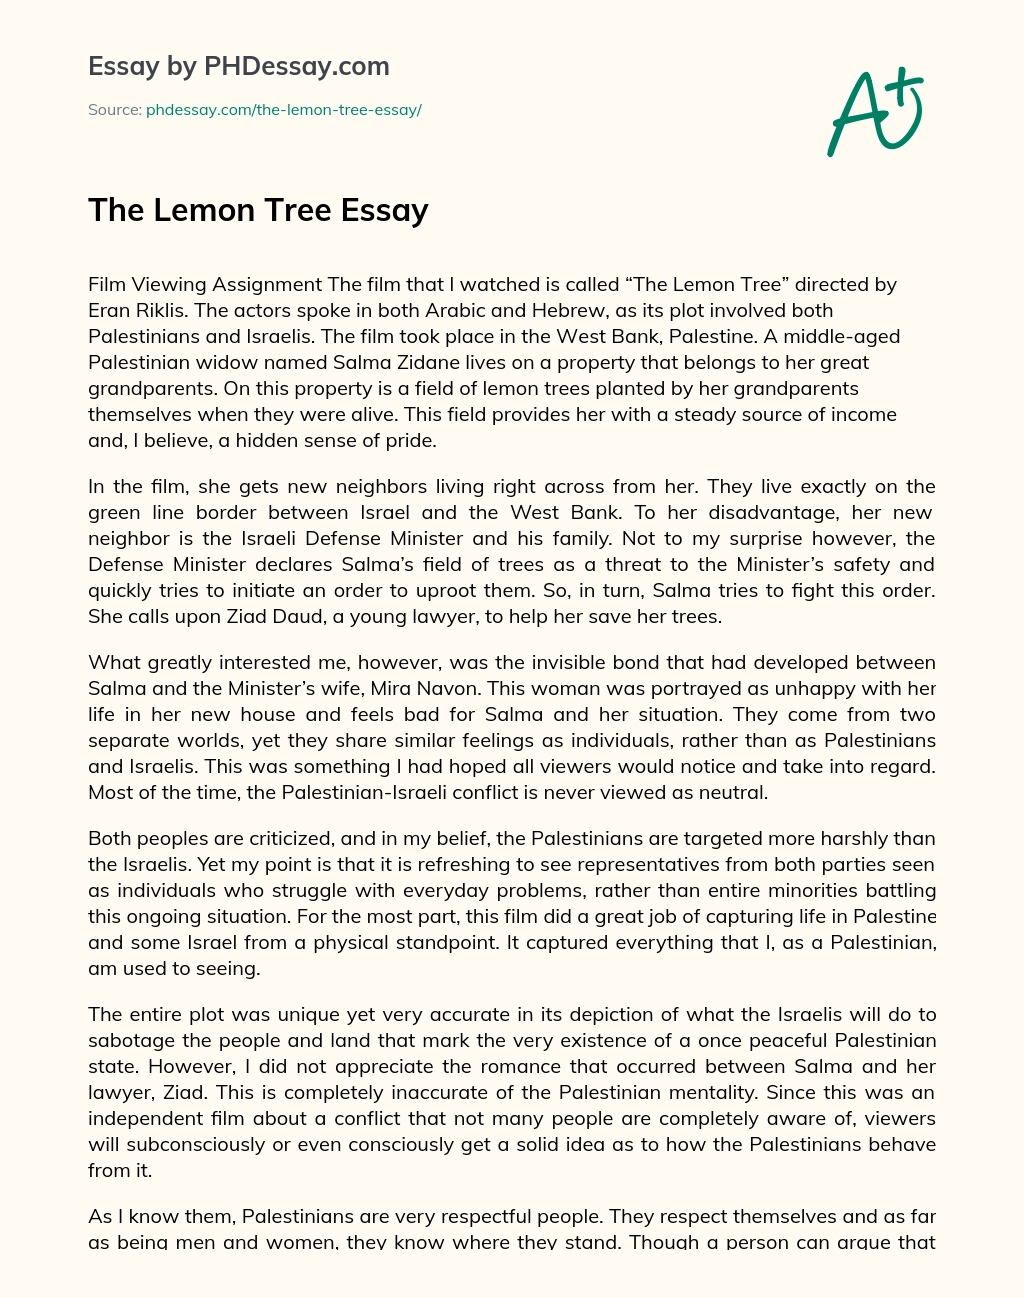 The Lemon Tree Essay essay